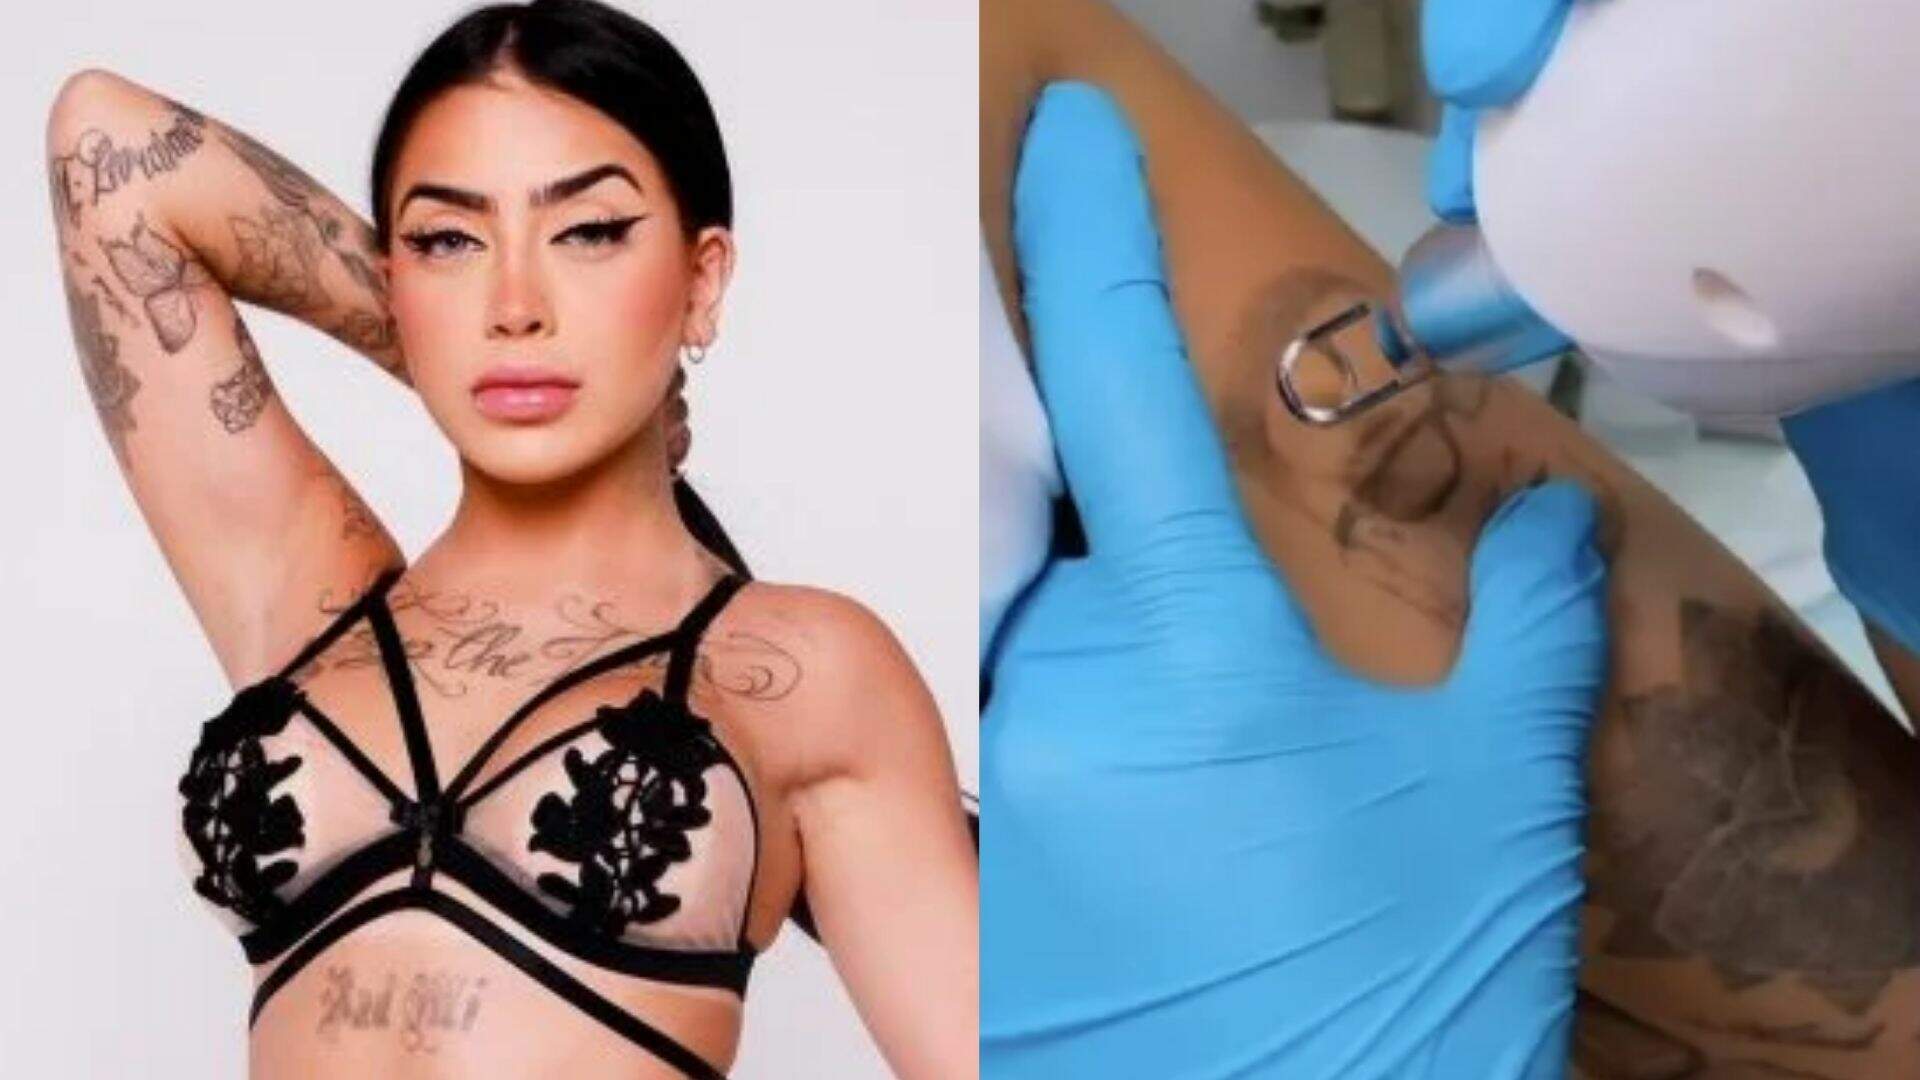 Mirella remove tatuagem inusitada e motivo envolvendo famoso surpreende: “Agora vai!”